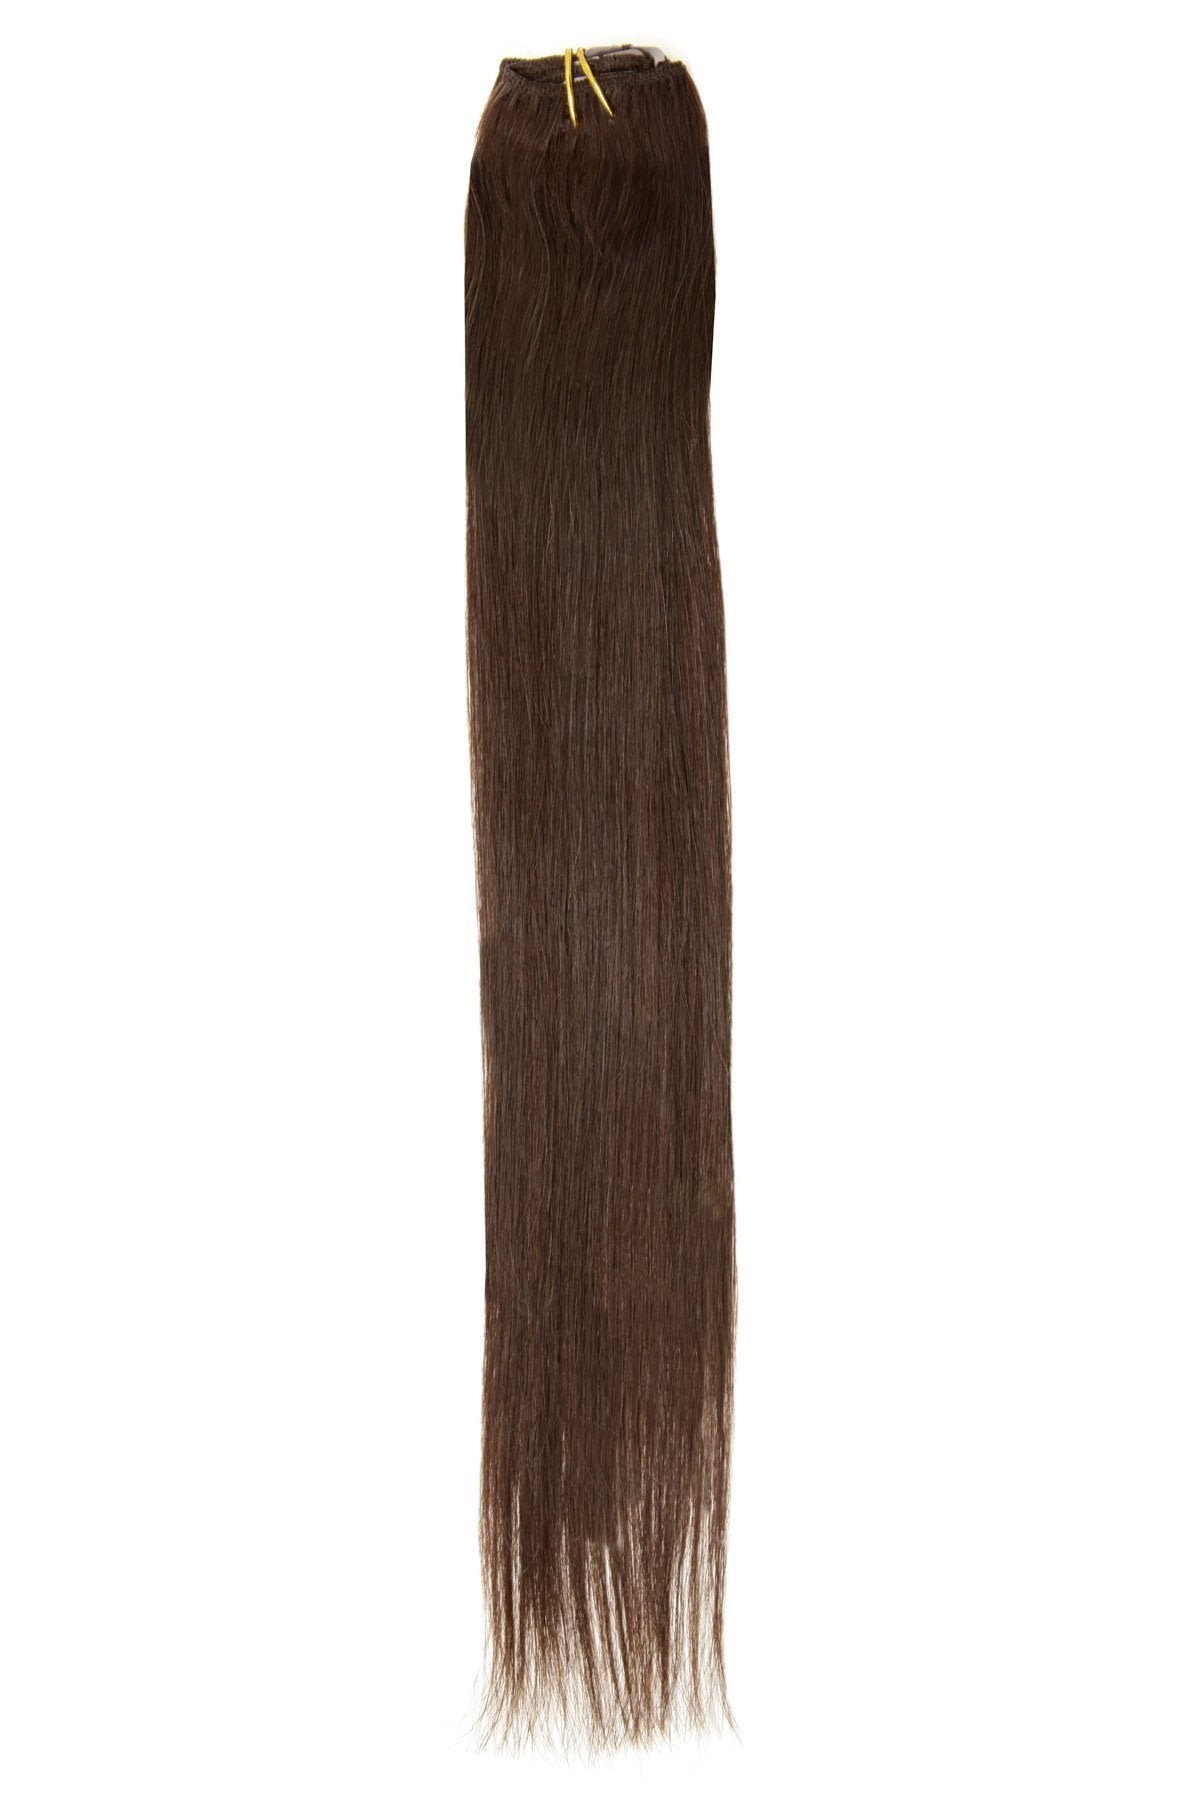 Single Weft Clip in Hair 18" - Darkest Brown 2 - 100% Human Hair - beautyhair.co.ukHair Extensions